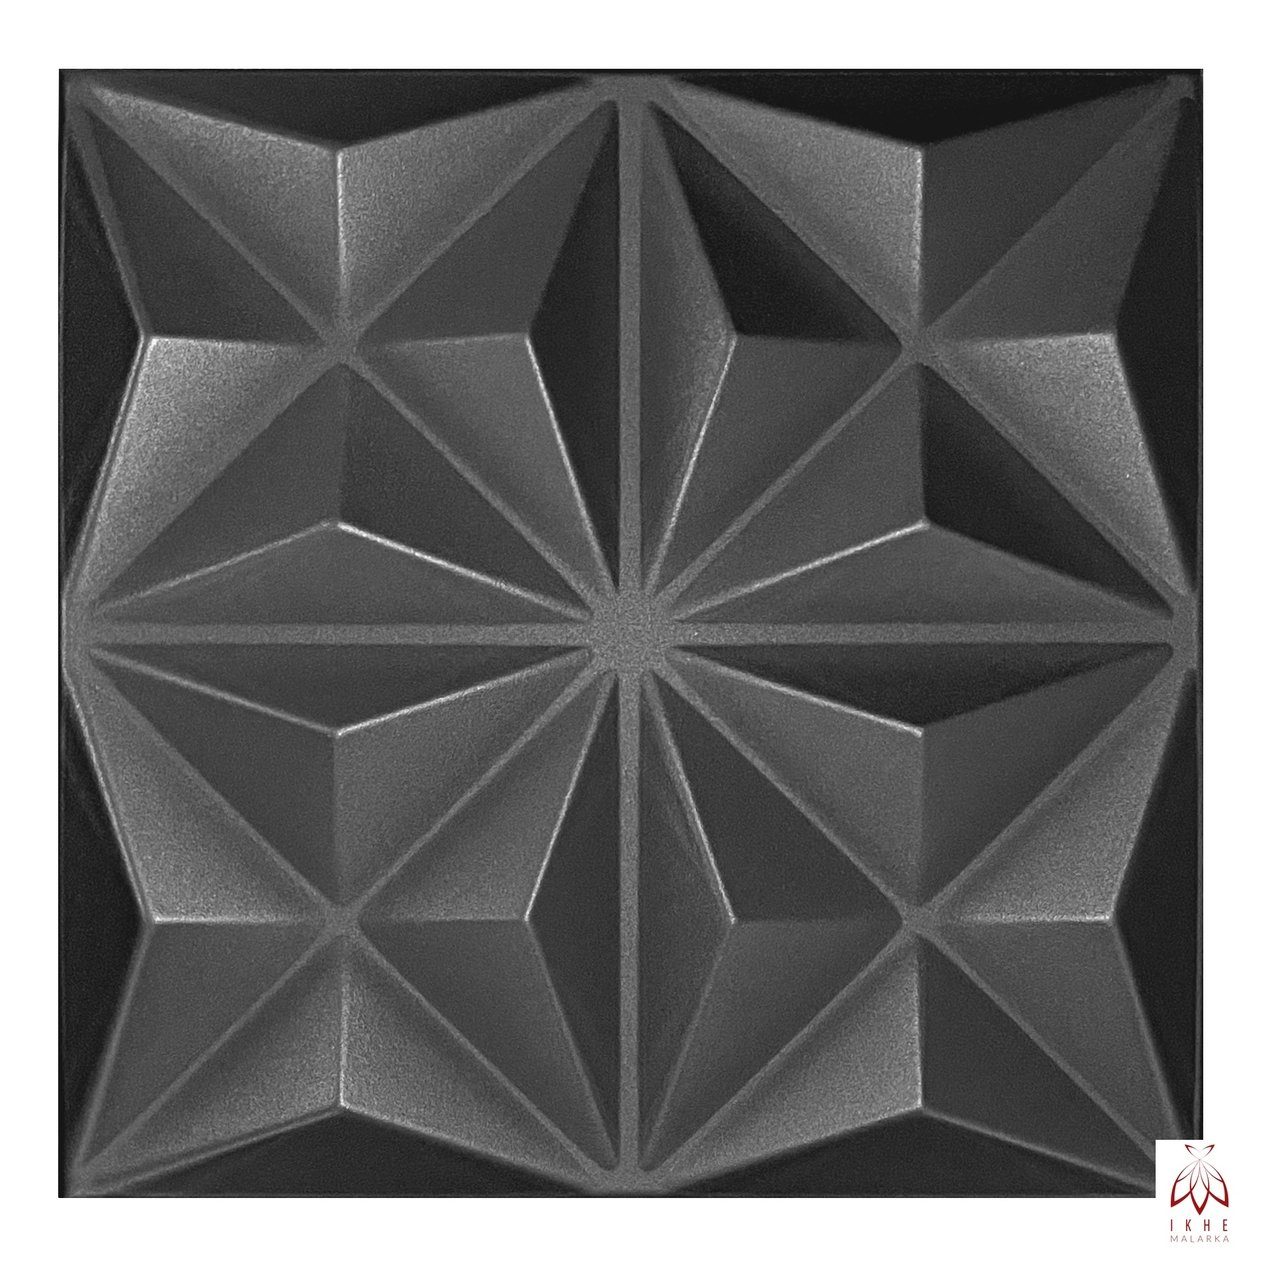 IKHEMalarka 3D Wandpaneel Polystyrol 3D Paneele Deckenpaneele 2-18 Quadratmeter, BxL: 50,00x50,00 cm, 0,25 qm, (24-tlg) Dekoren, Decken Wandverkleidung